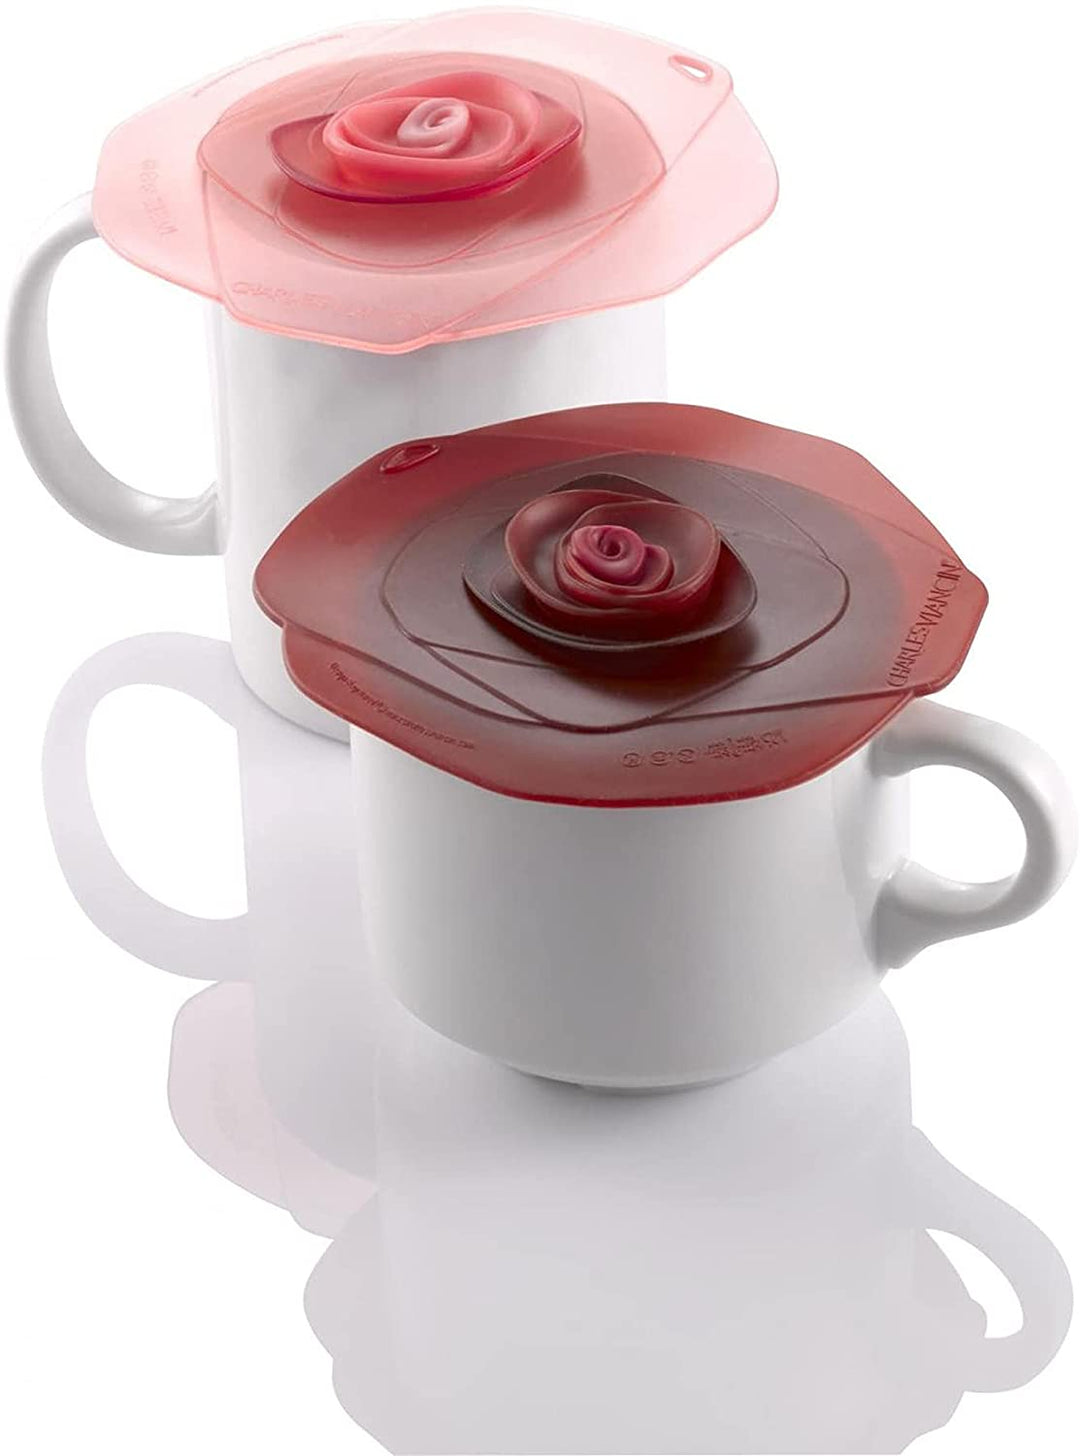 Charles Viancin Charles Viancin Rose Drink Covers - 4 Inch - Set of 2 Red / Light Pink